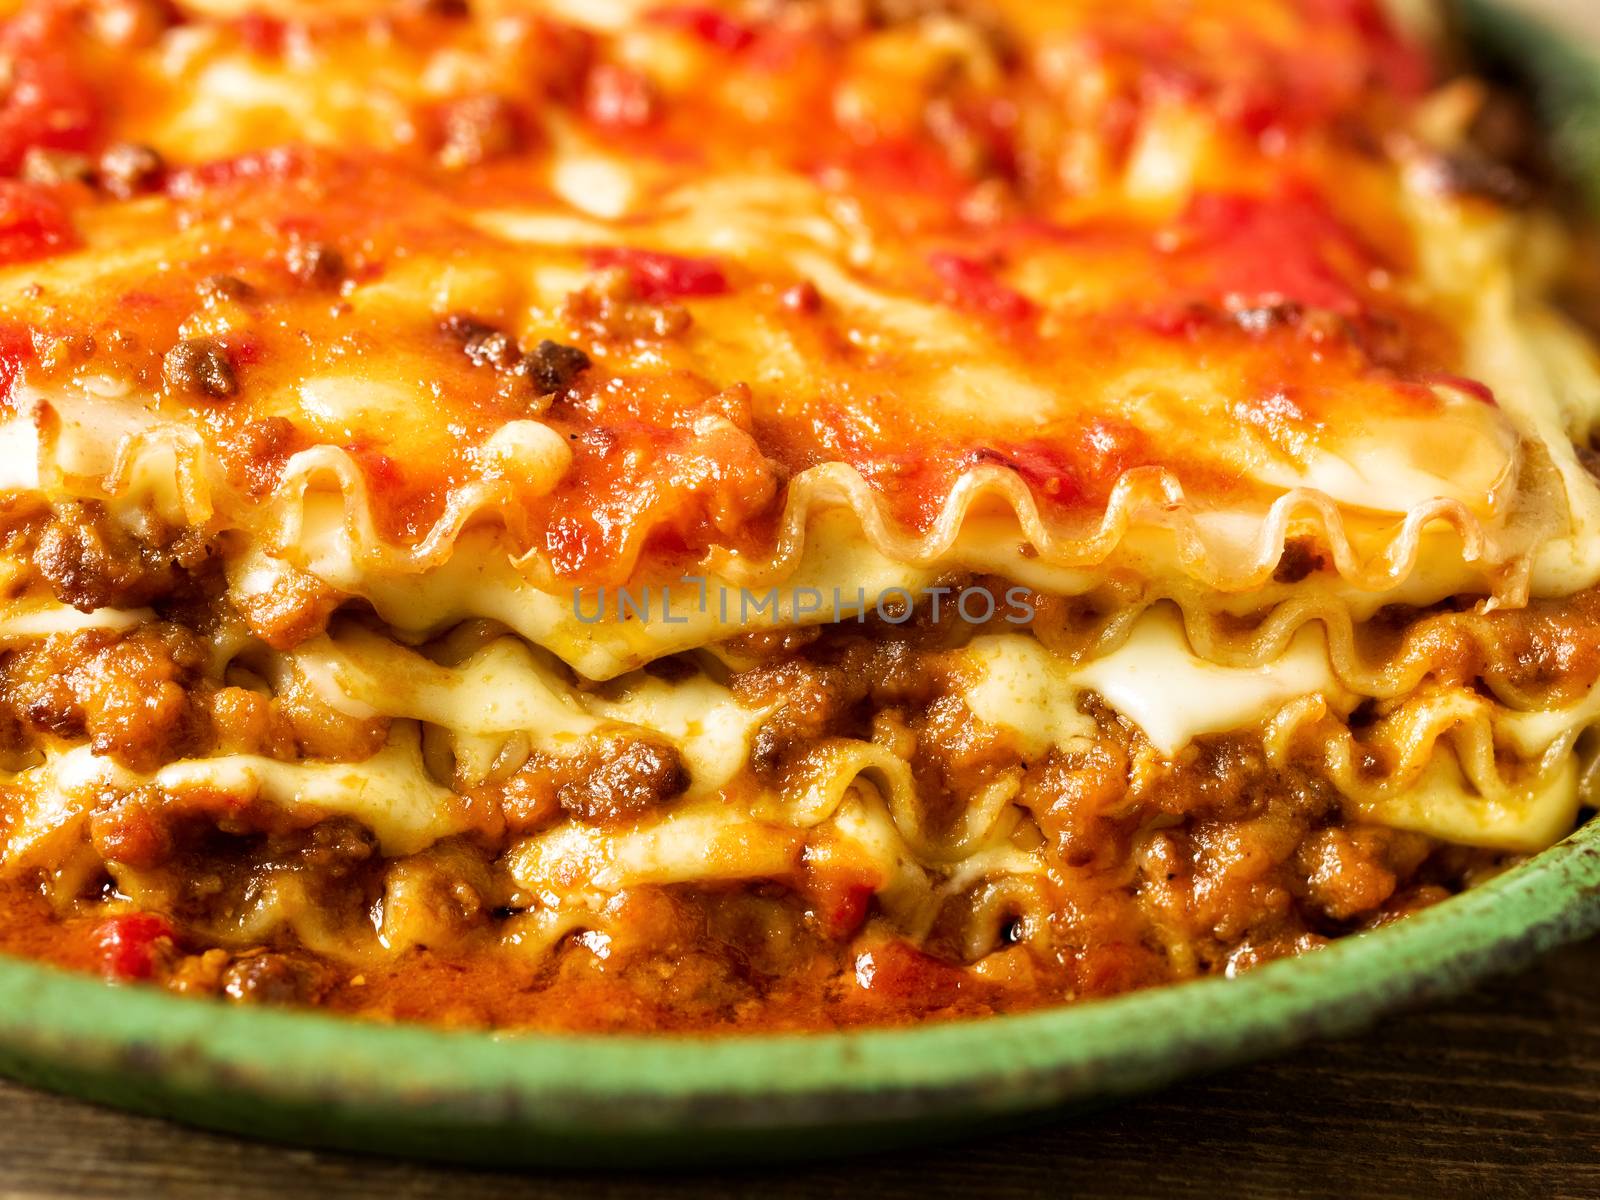 close up of rustic italian cheesy lasagna pasta